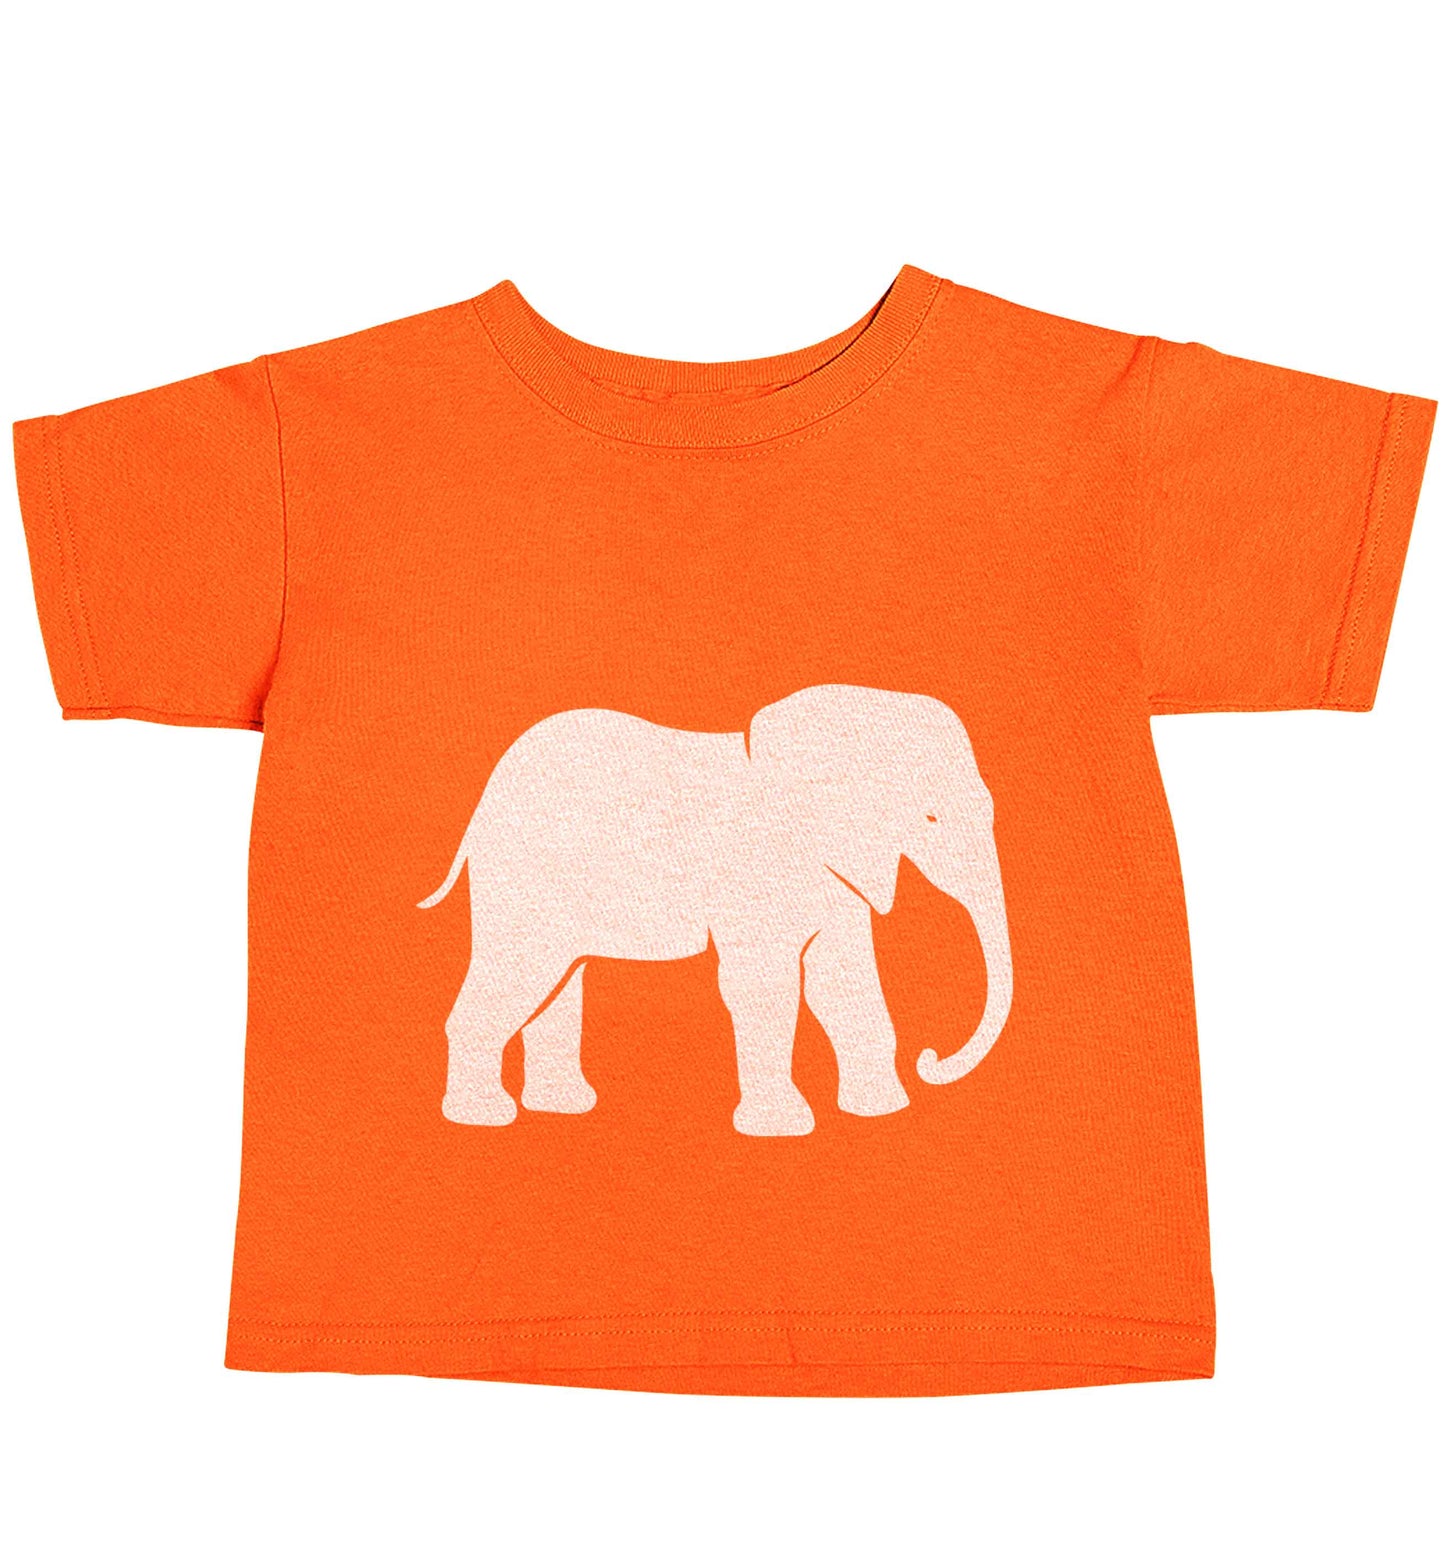 Pink elephant orange baby toddler Tshirt 2 Years